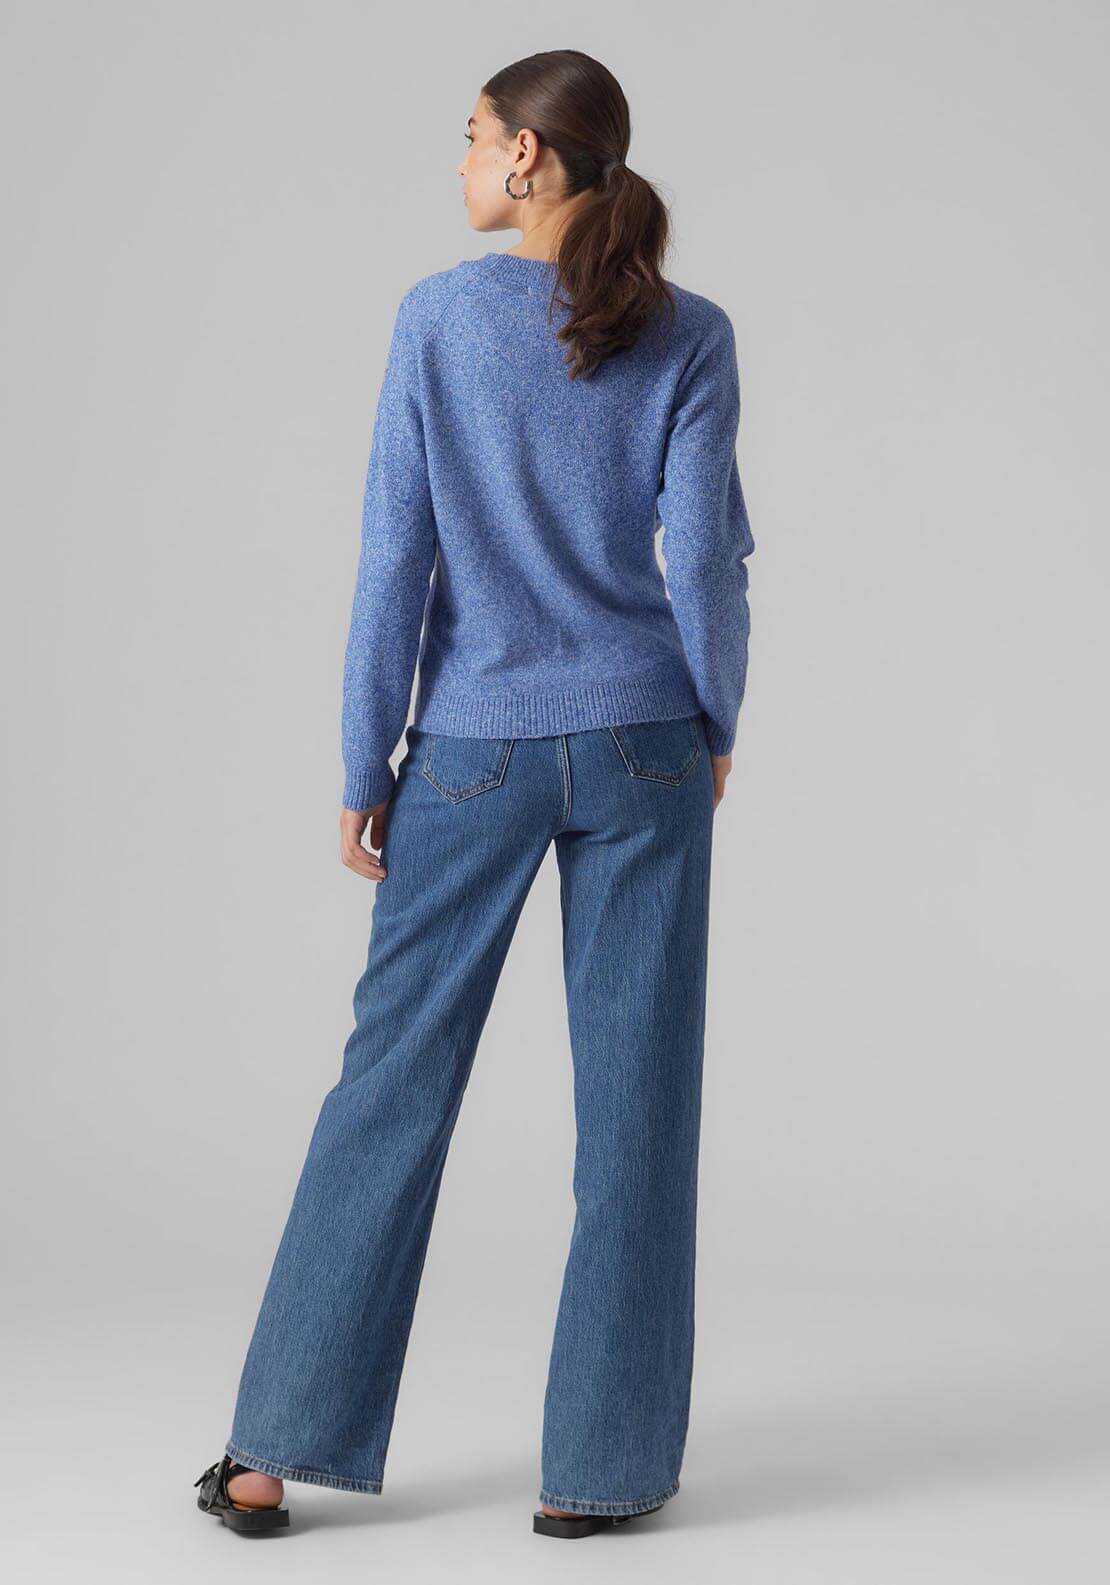 Vero Moda Pullover Jumper - Beaucoup Blue 3 Shaws Department Stores